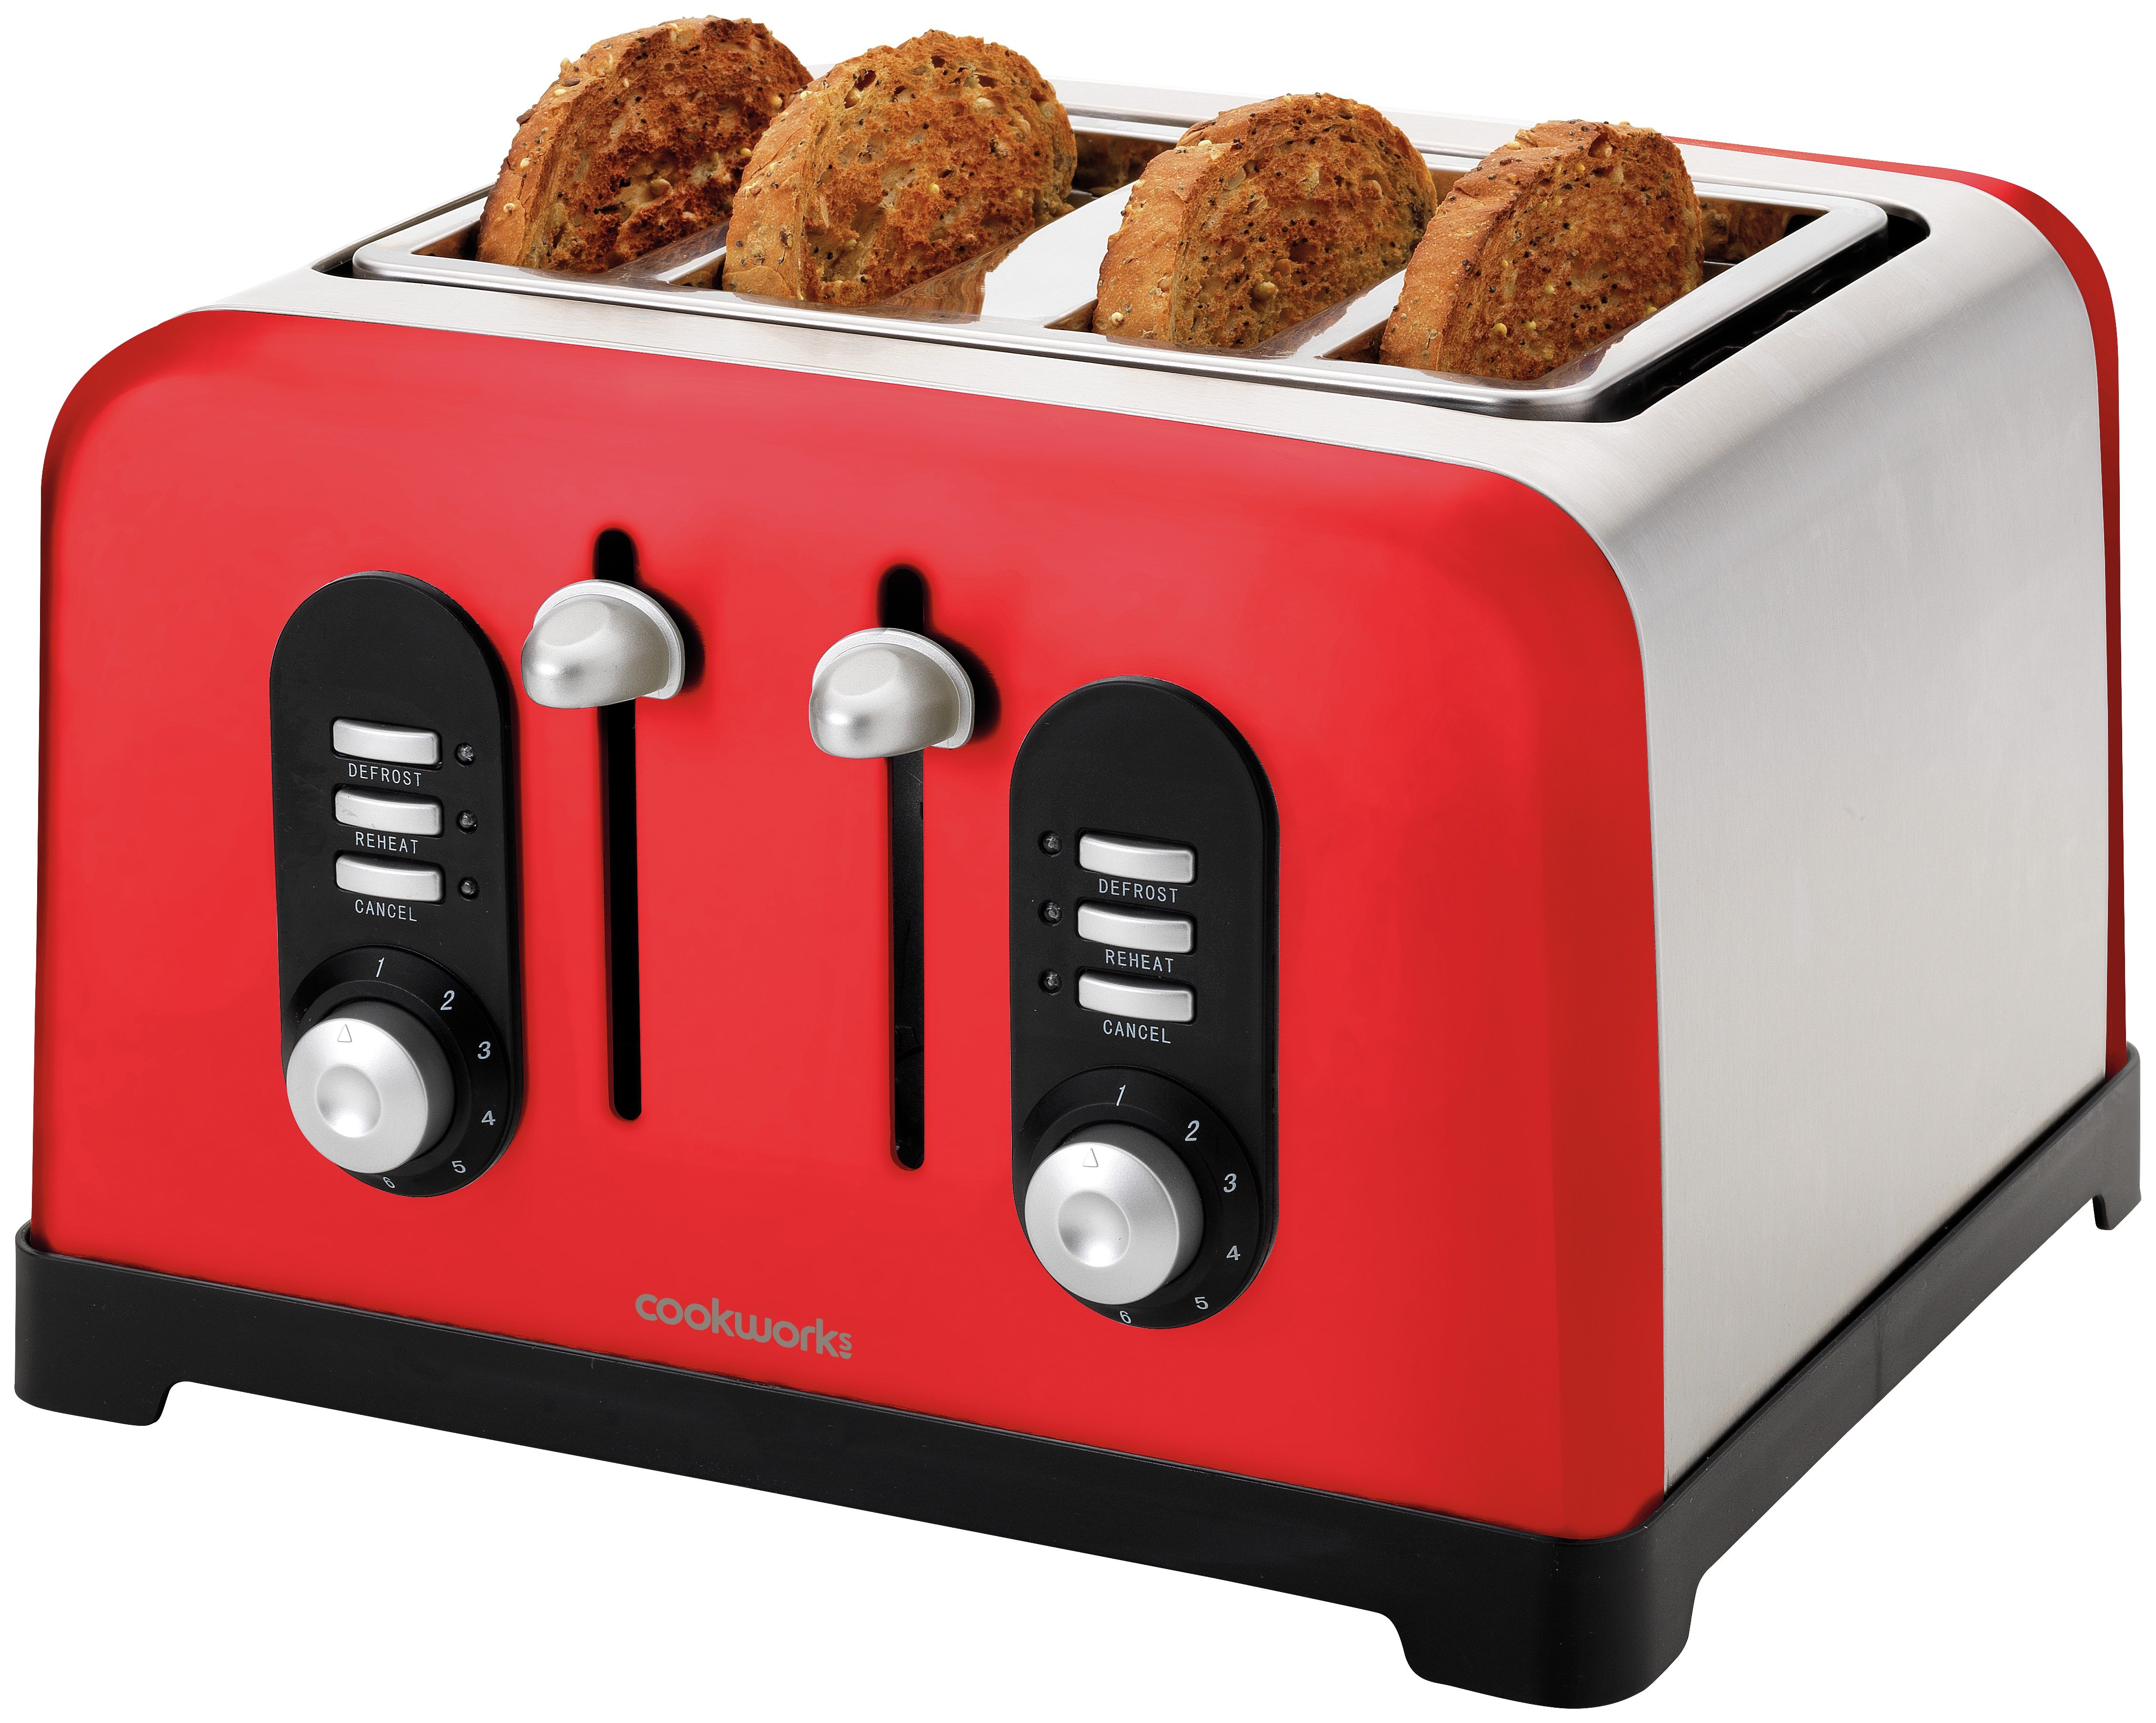 Cookworks Premium 4 Slice Toaster review